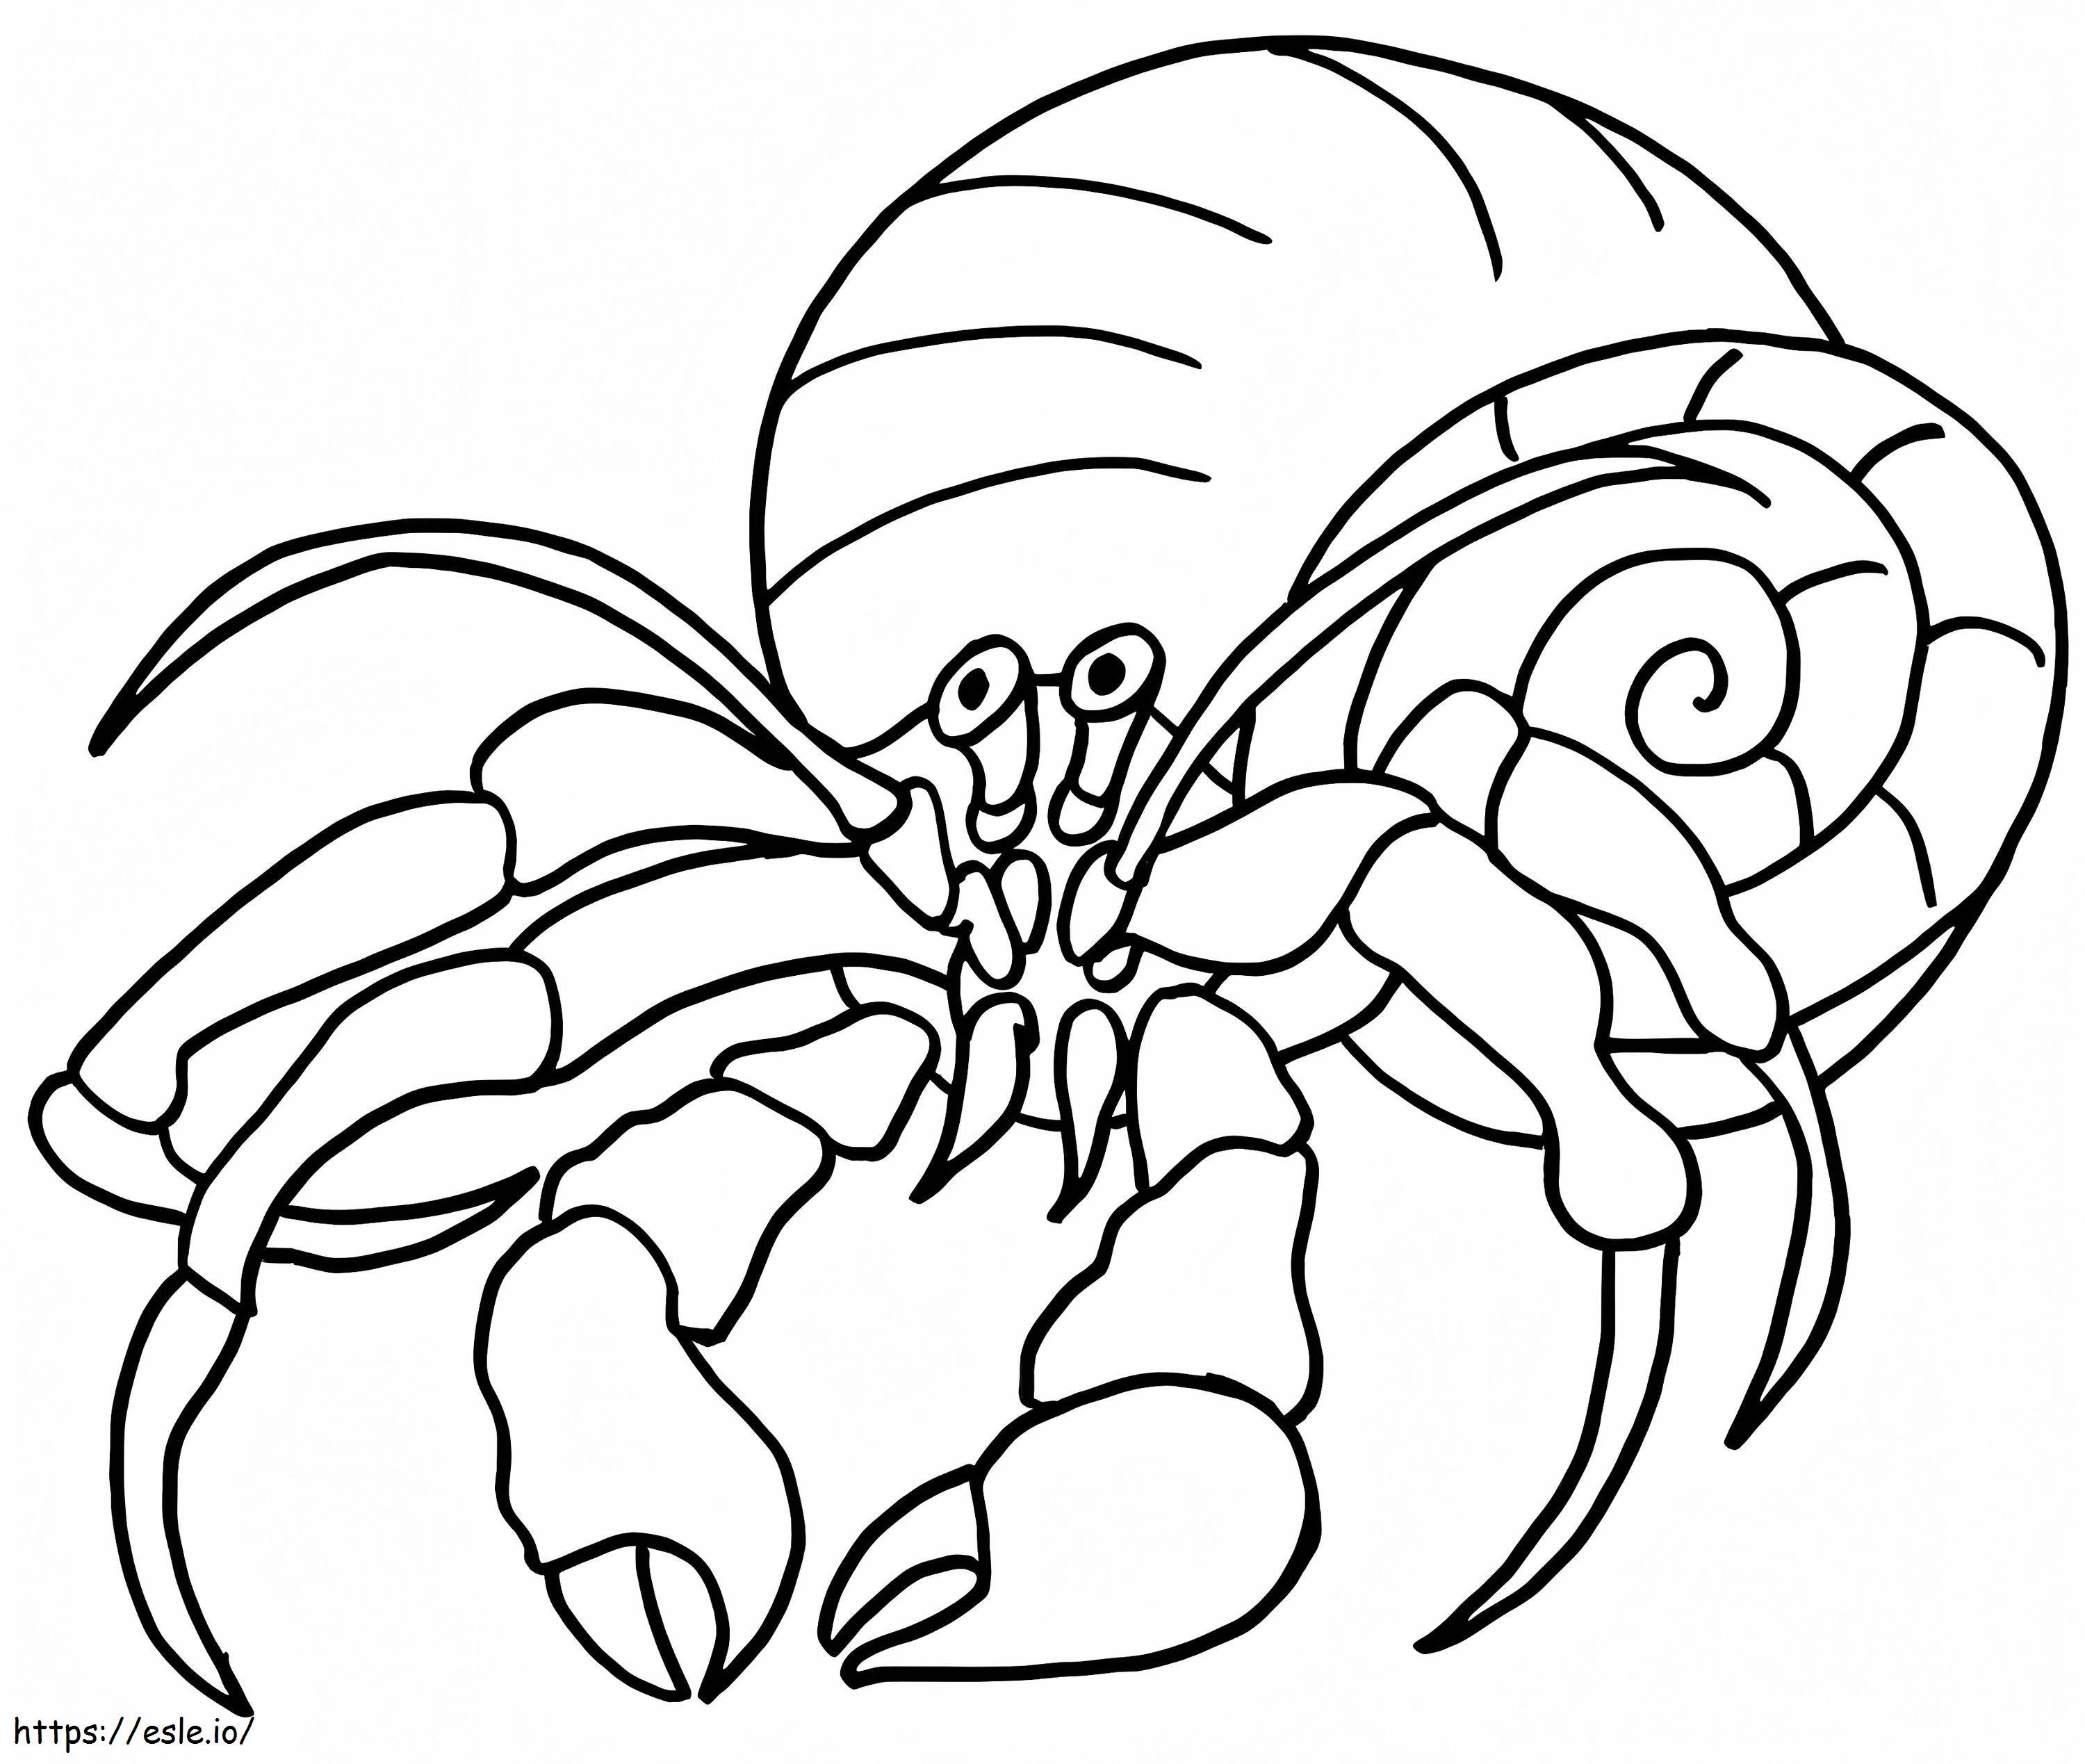 Hermit Crab 4 coloring page